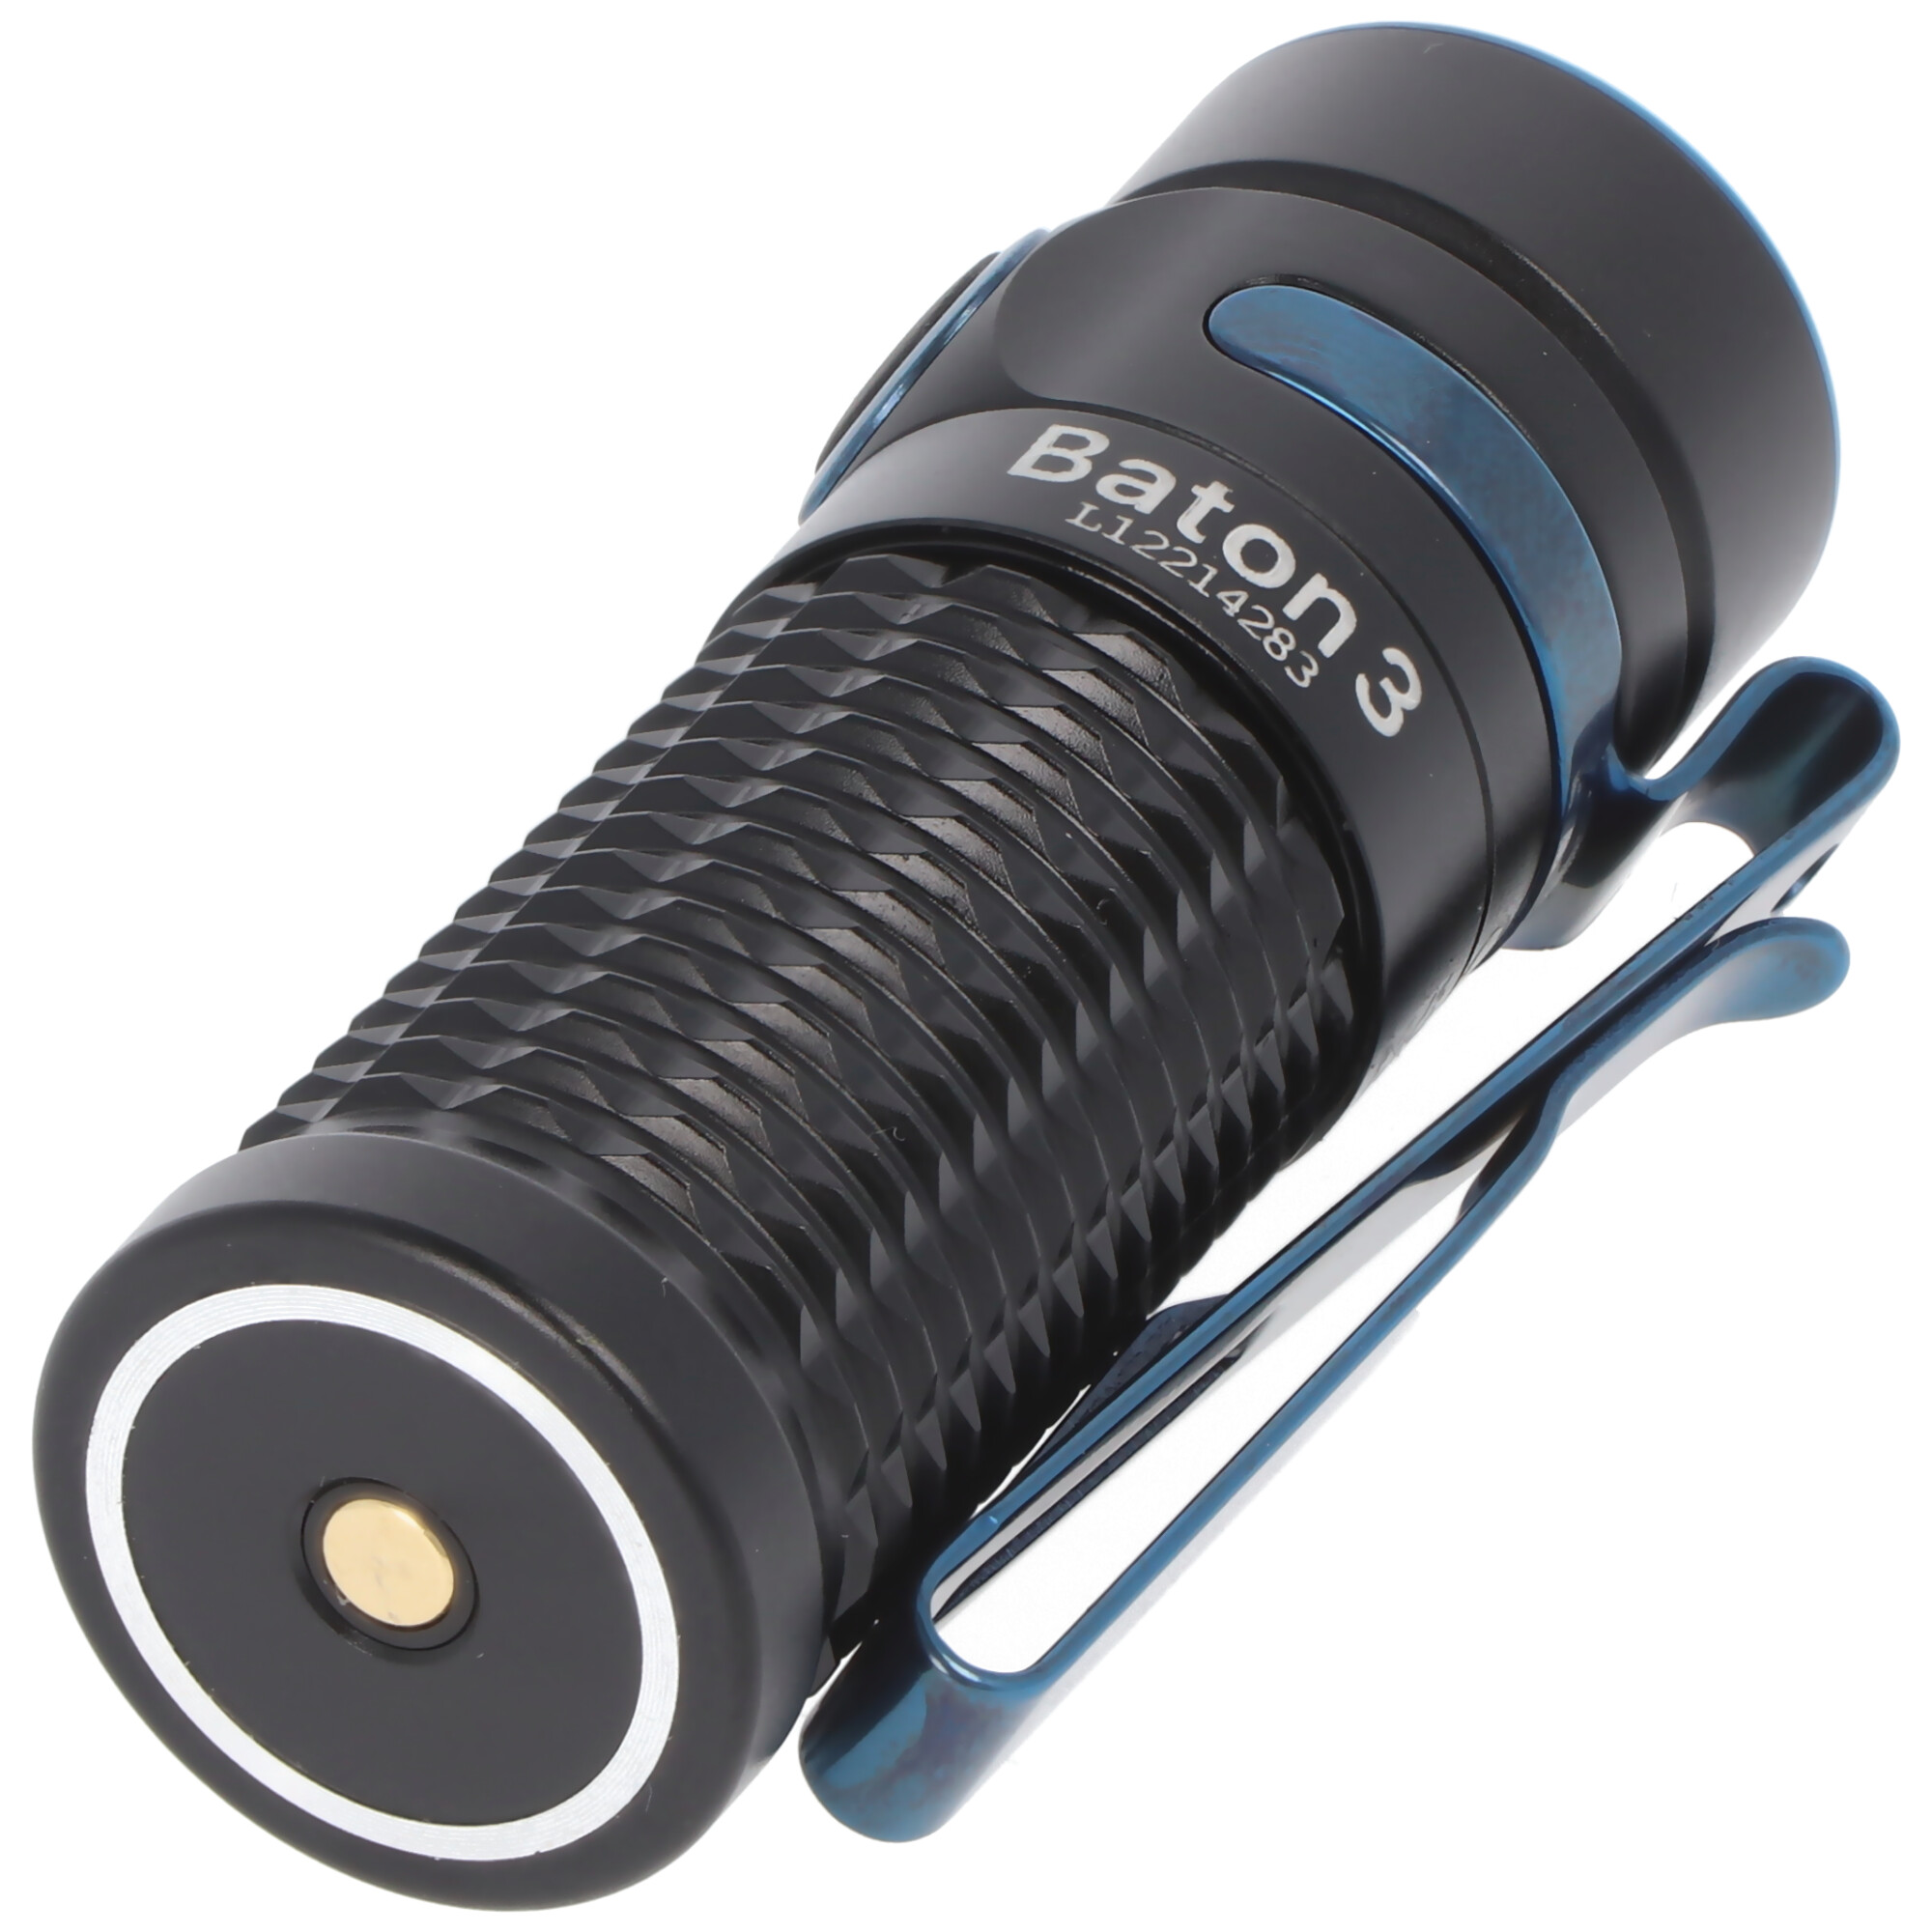 Olight Baton 3 Premium Edition, LED-Taschenlampe Baton 3 mit Ladecase schwarz, drahtloses Laden, inklusive Akku und Baton 3 Ladecase schwarz